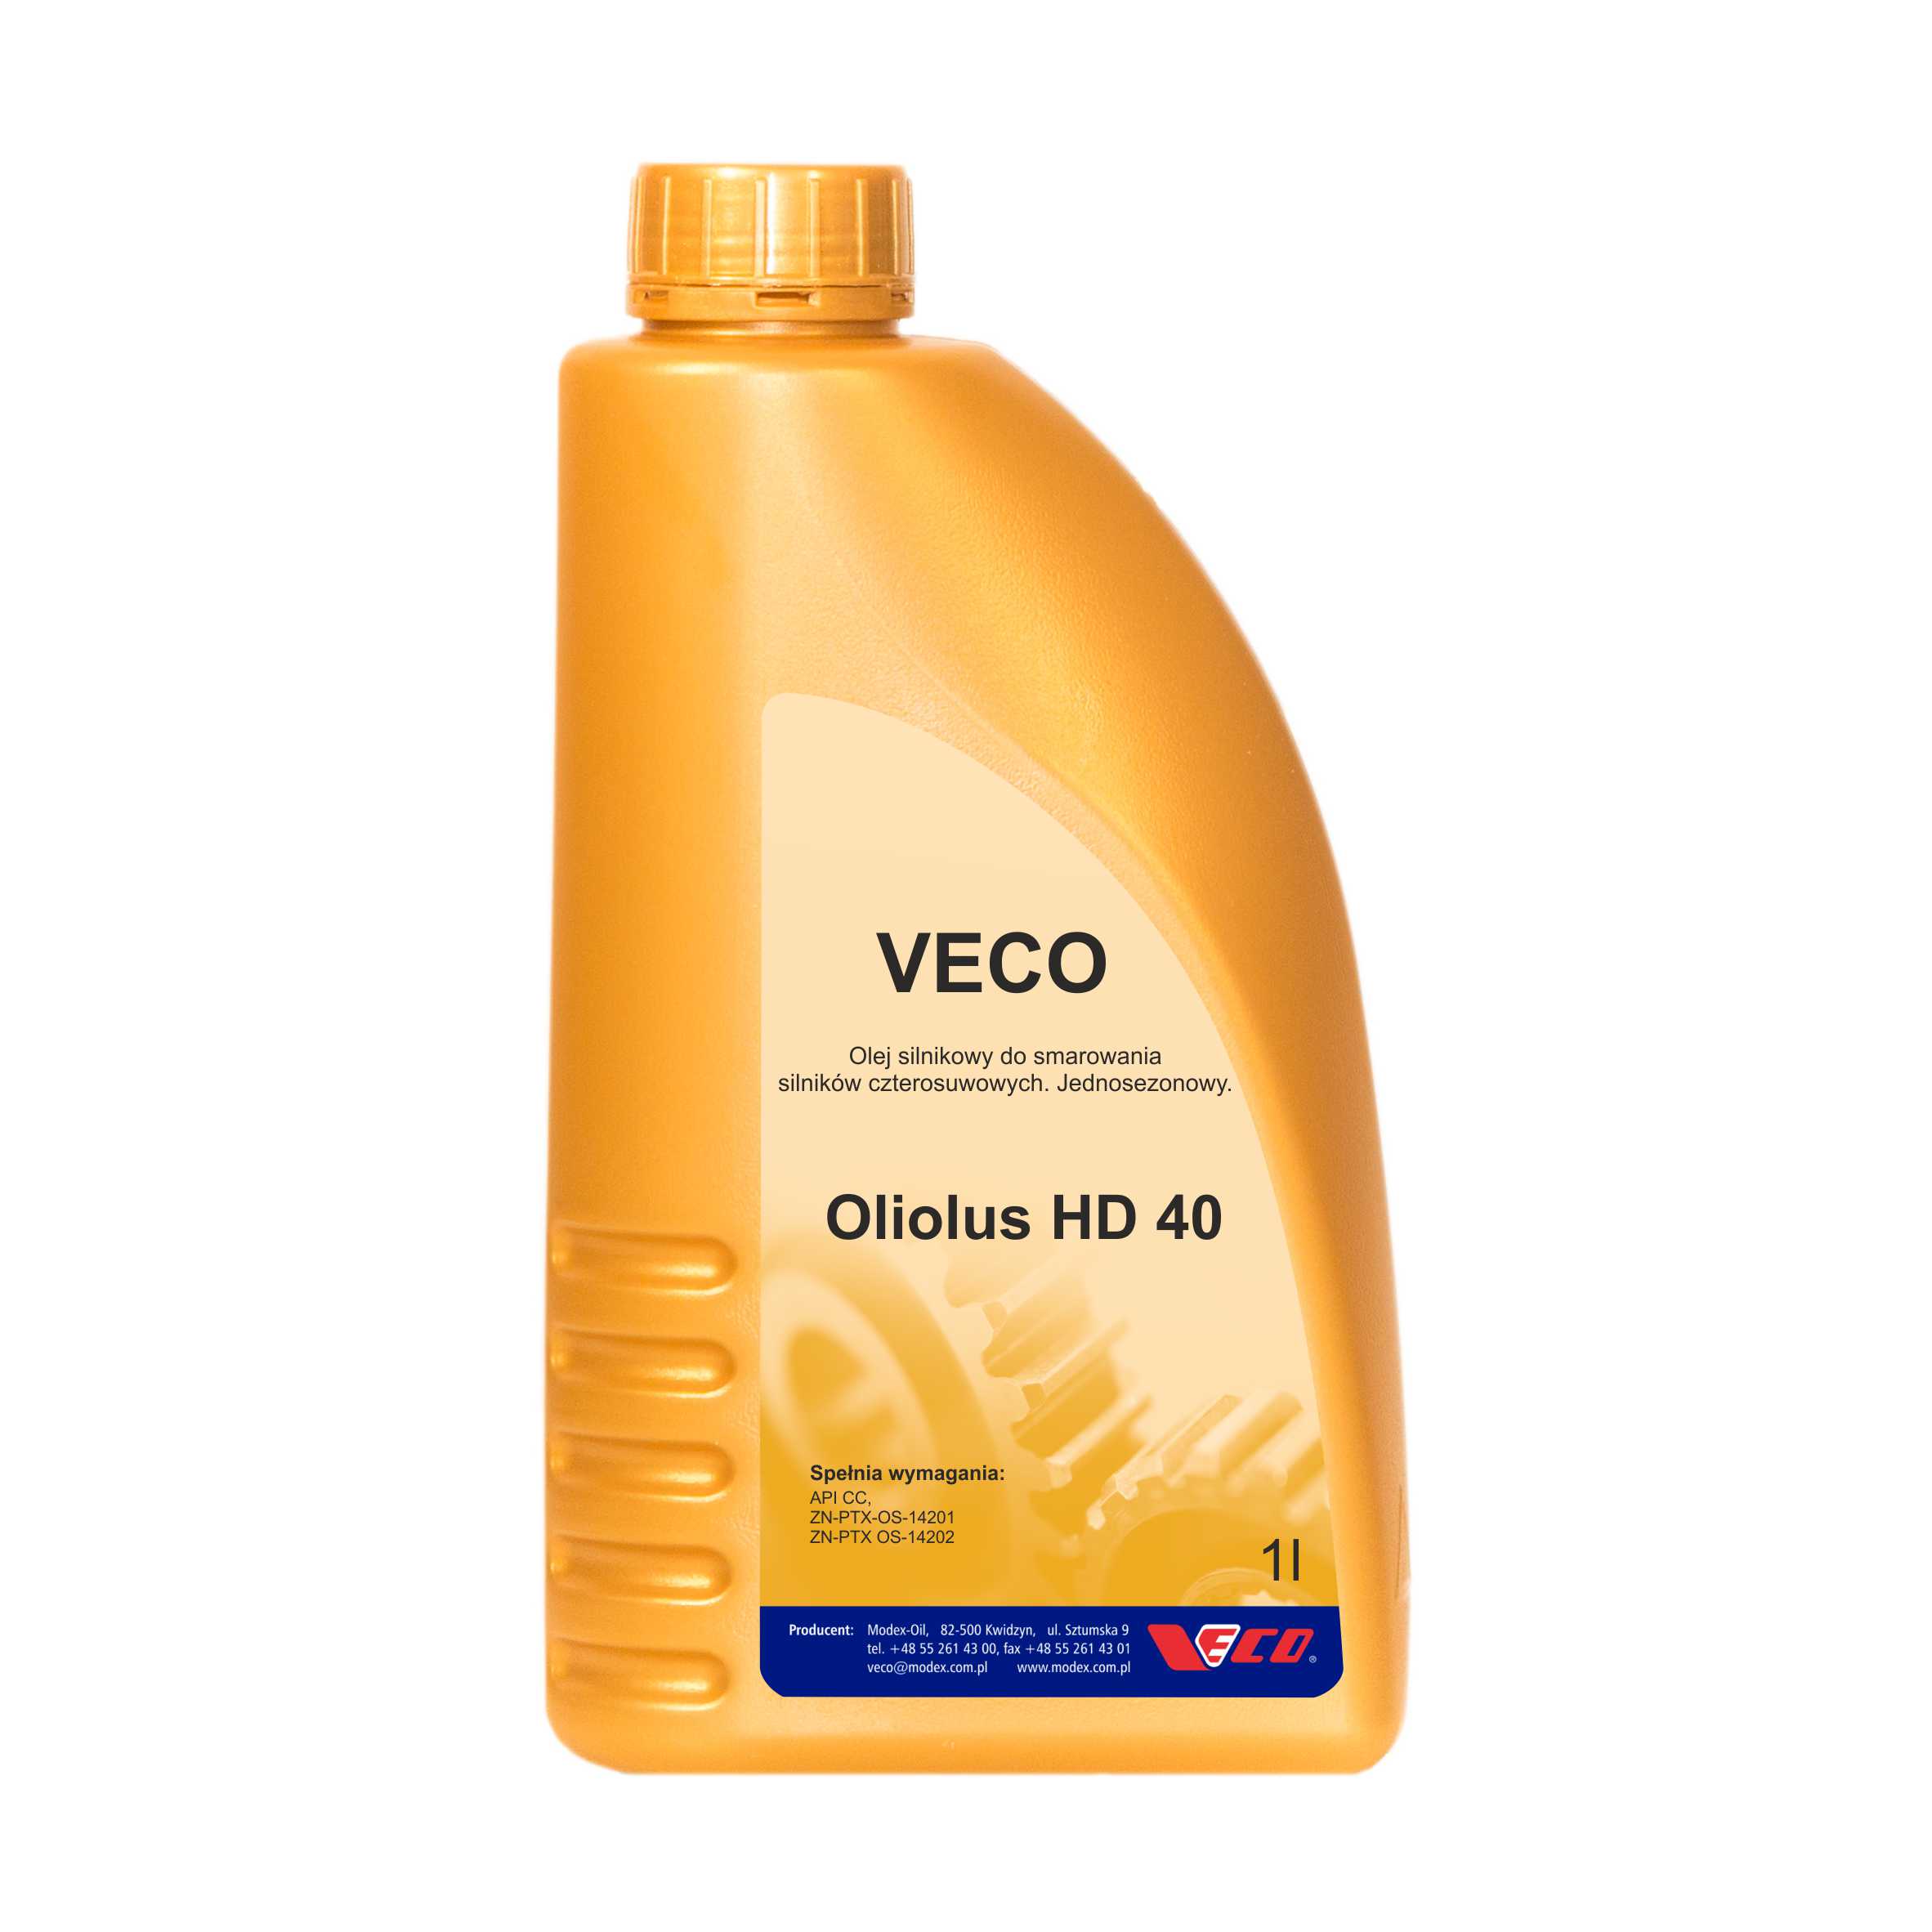 VECO Oliolus HD 40 opak. 1L class=